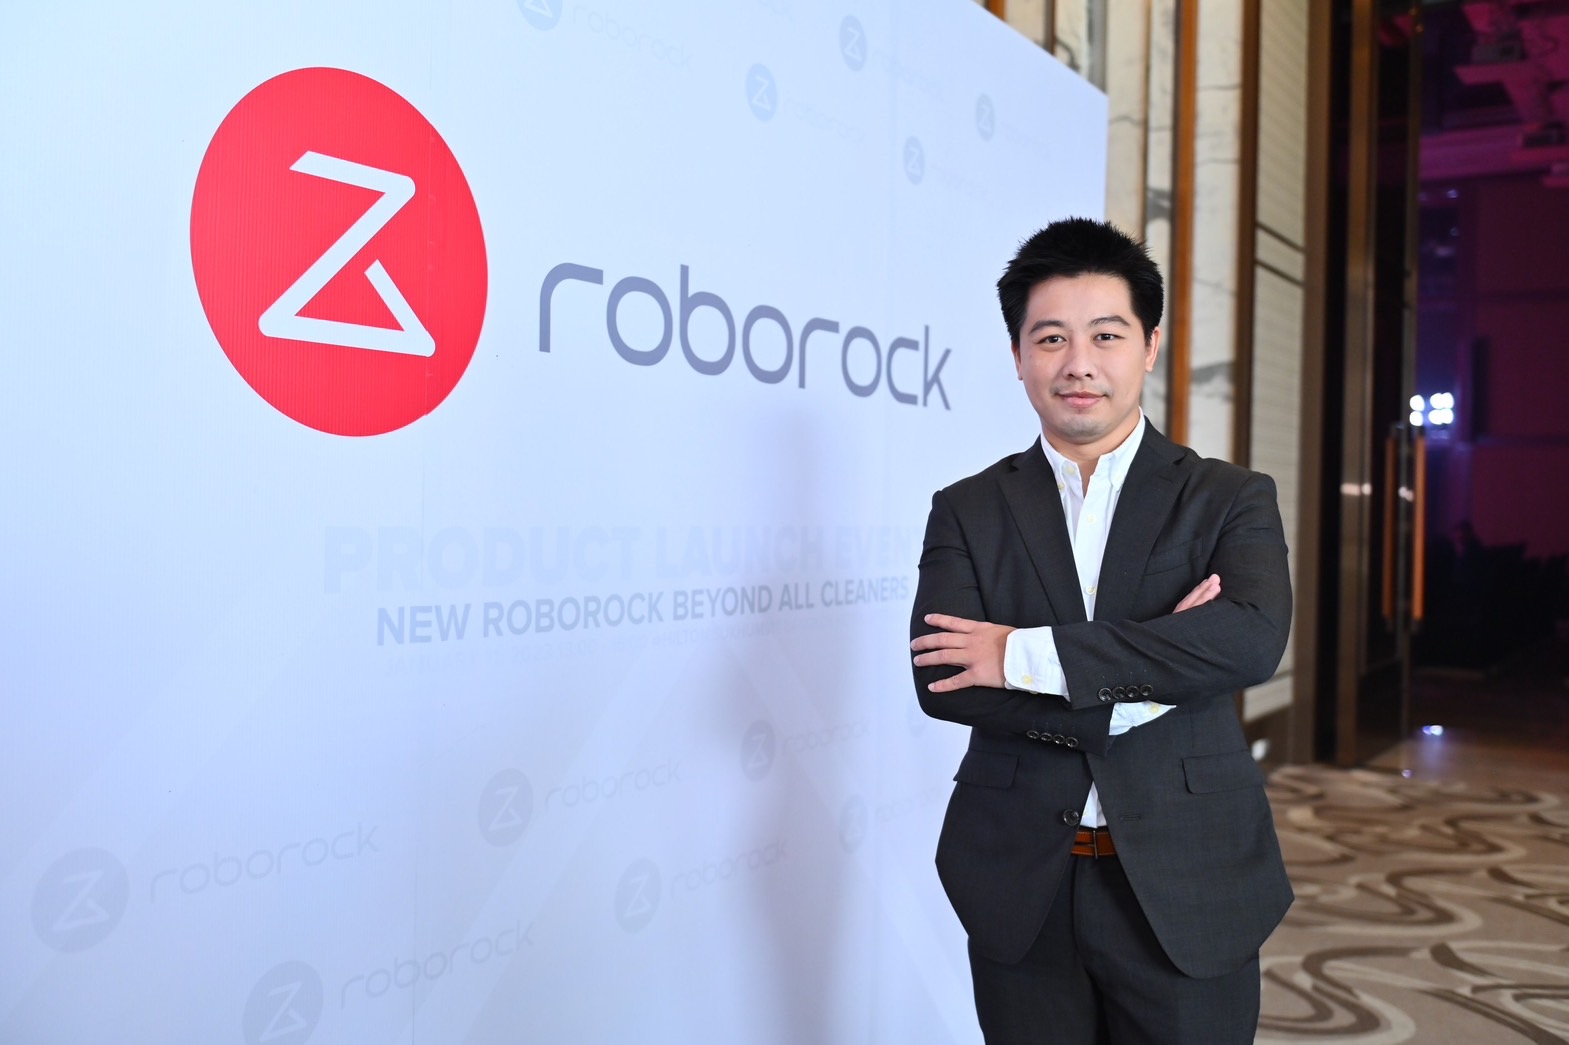 Roborock (โรโบร็อค) แบรนด์ผู้นำนวัตกรรมหุ่นยนต์ดูดฝุ่นและถูพื้นอัจฉริยะระดับโลก จัดงานแถลงข่าว 'Product Launch Event New Roborock Beyond All Cleaners' ทางเลือกใหม่ เพื่อยกระดับการทำความสะอาดขึ้นไปอีกขั้น